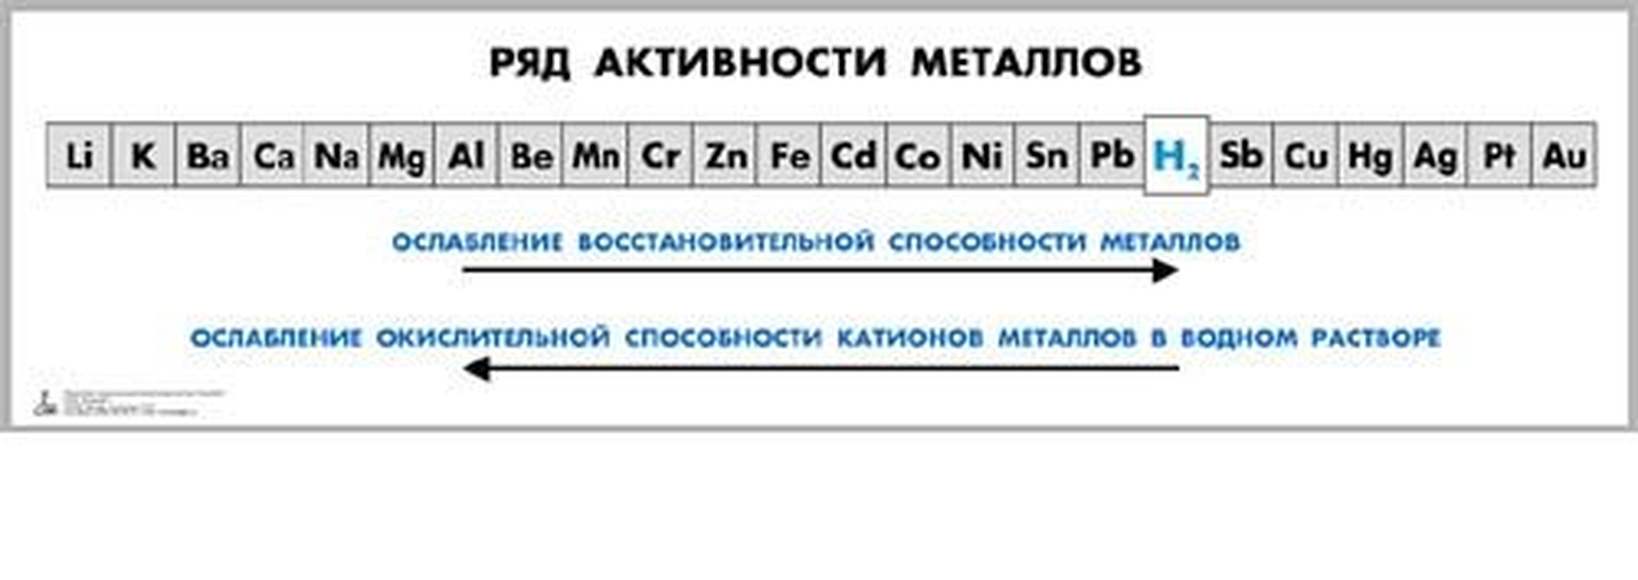 Таблица "Ряд активности металлов"